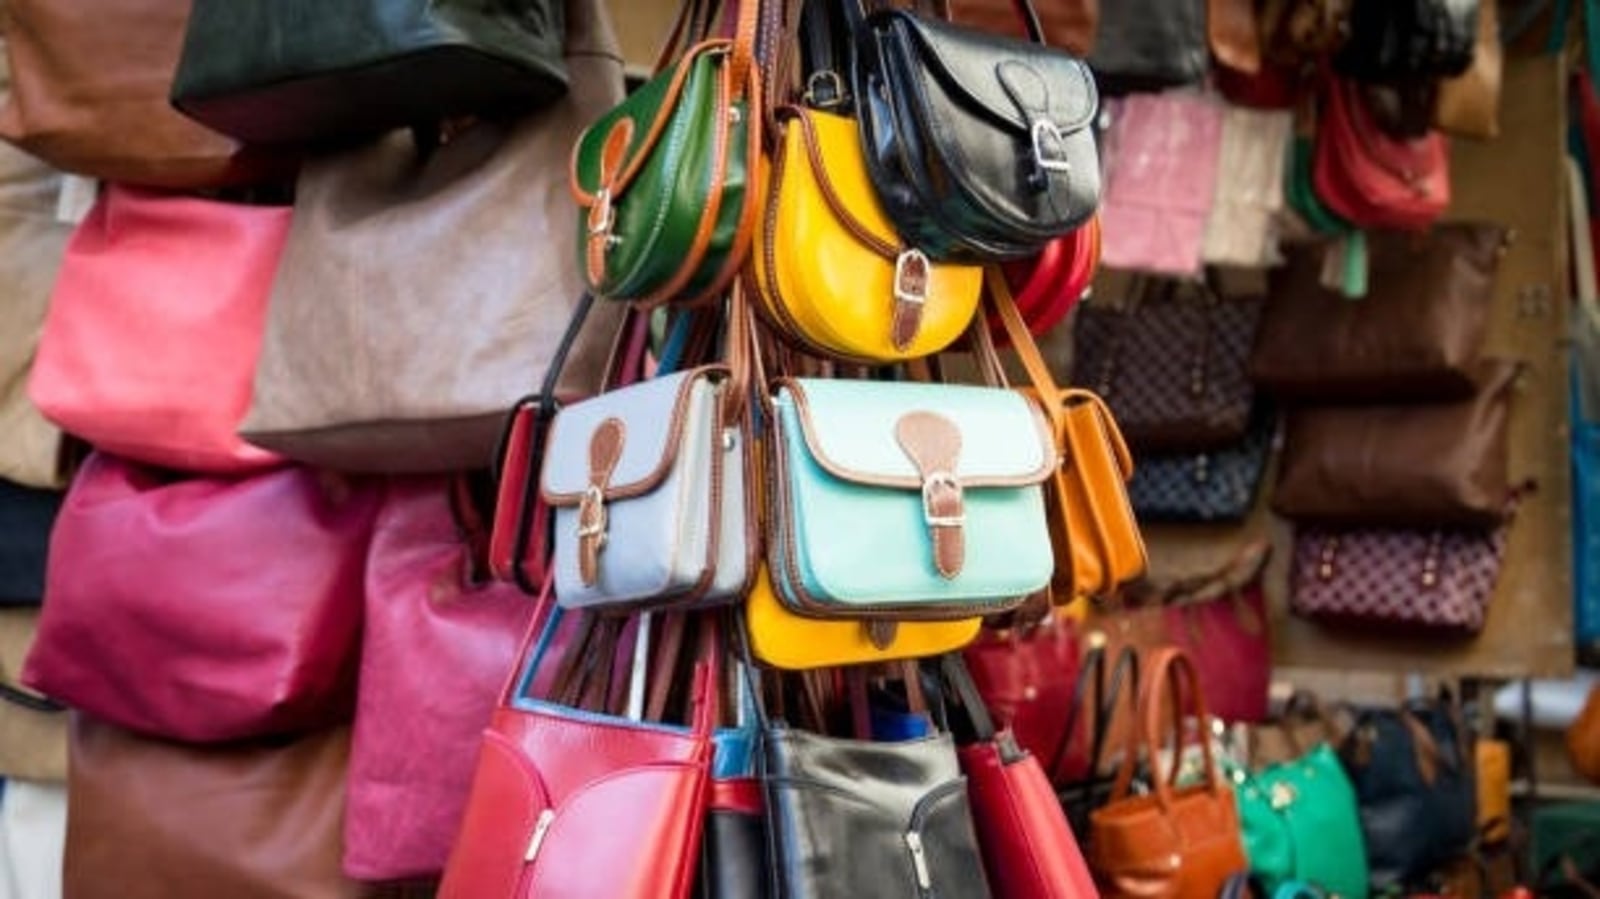 Women's Handbag,స్టైలిష్‌ హ్యాండ్‌ బ్యాగ్‌లు.. ఓ లుక్‌ వేయండి - buy these  best women's handbag in low cost from amazon sale - Samayam Telugu